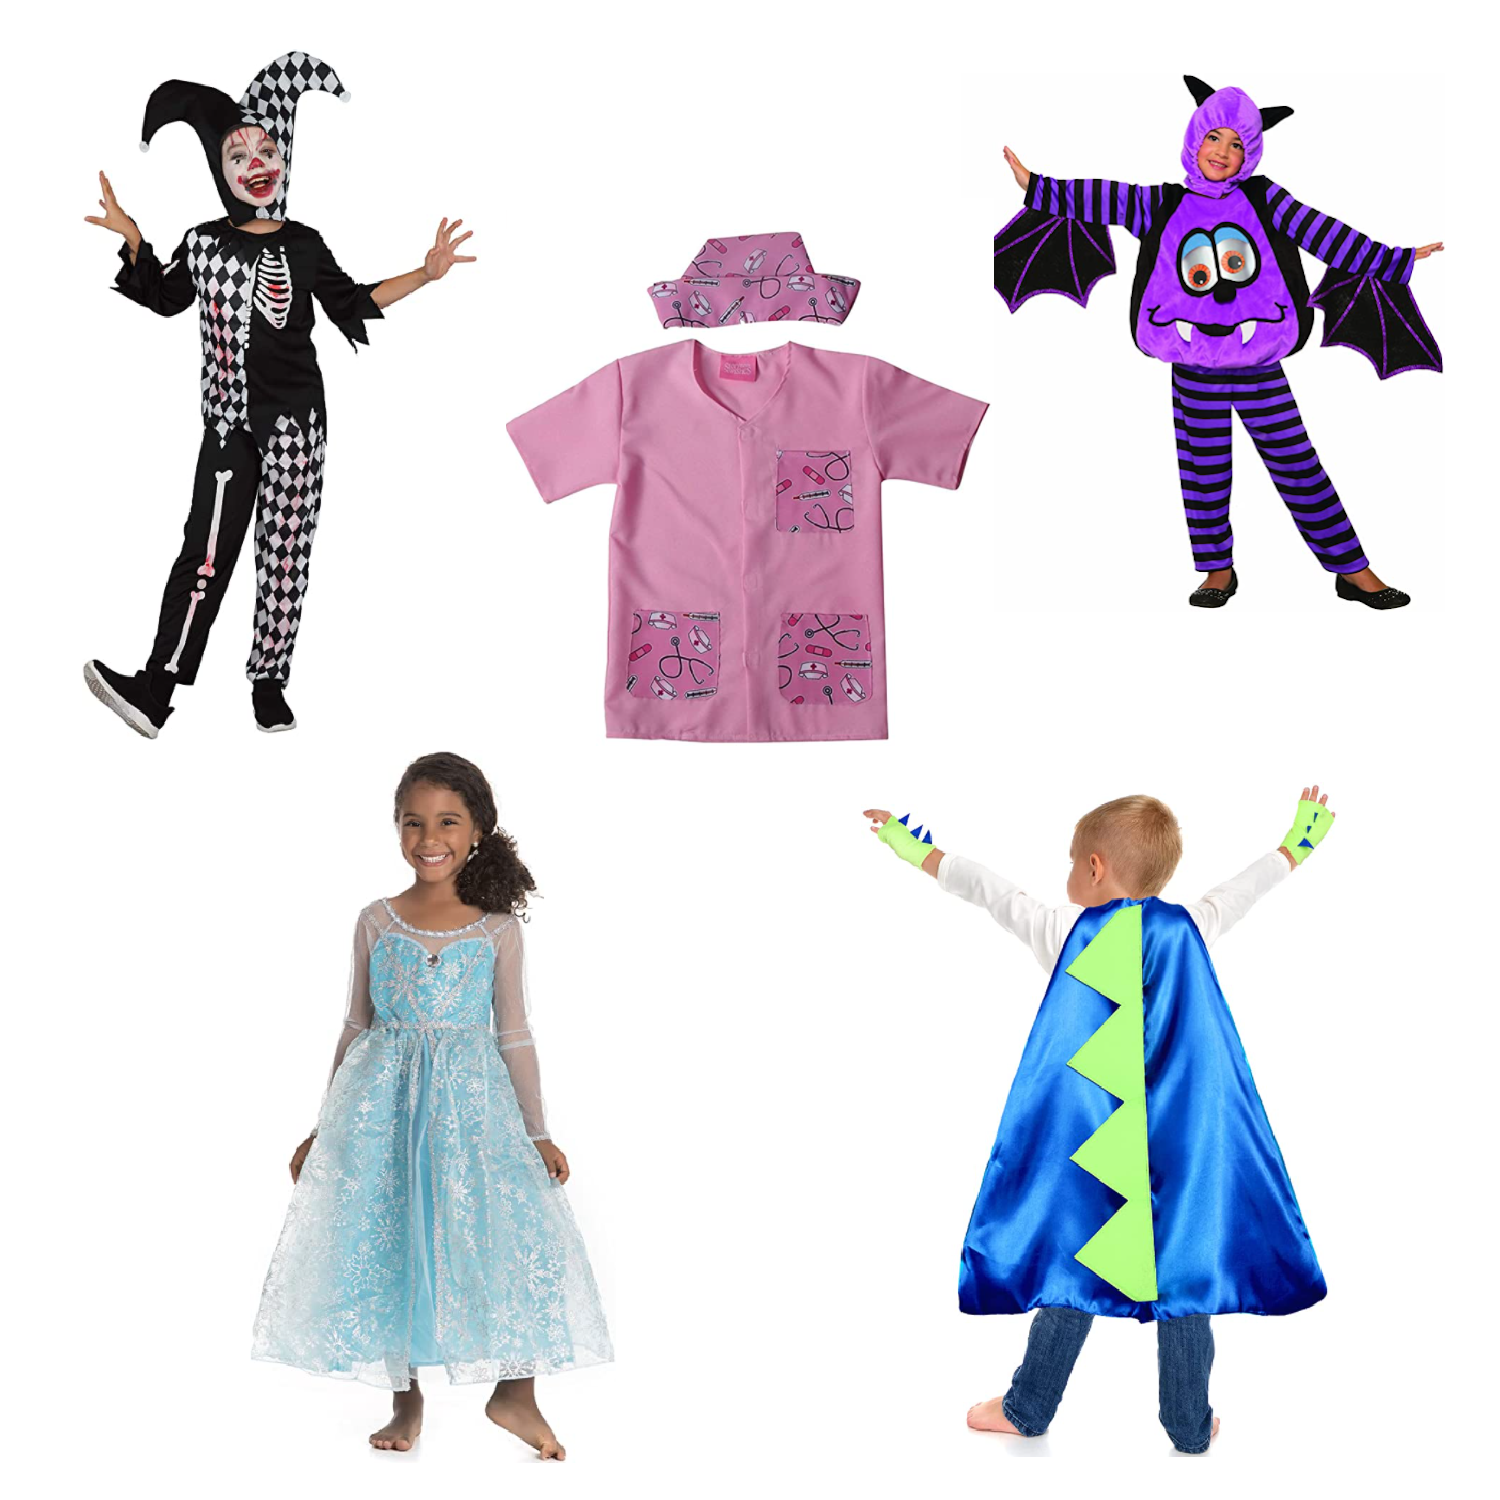 Halloween costumes under $10 - jester, nurse, silly eyes bat, frozen dress, and dragon cape.